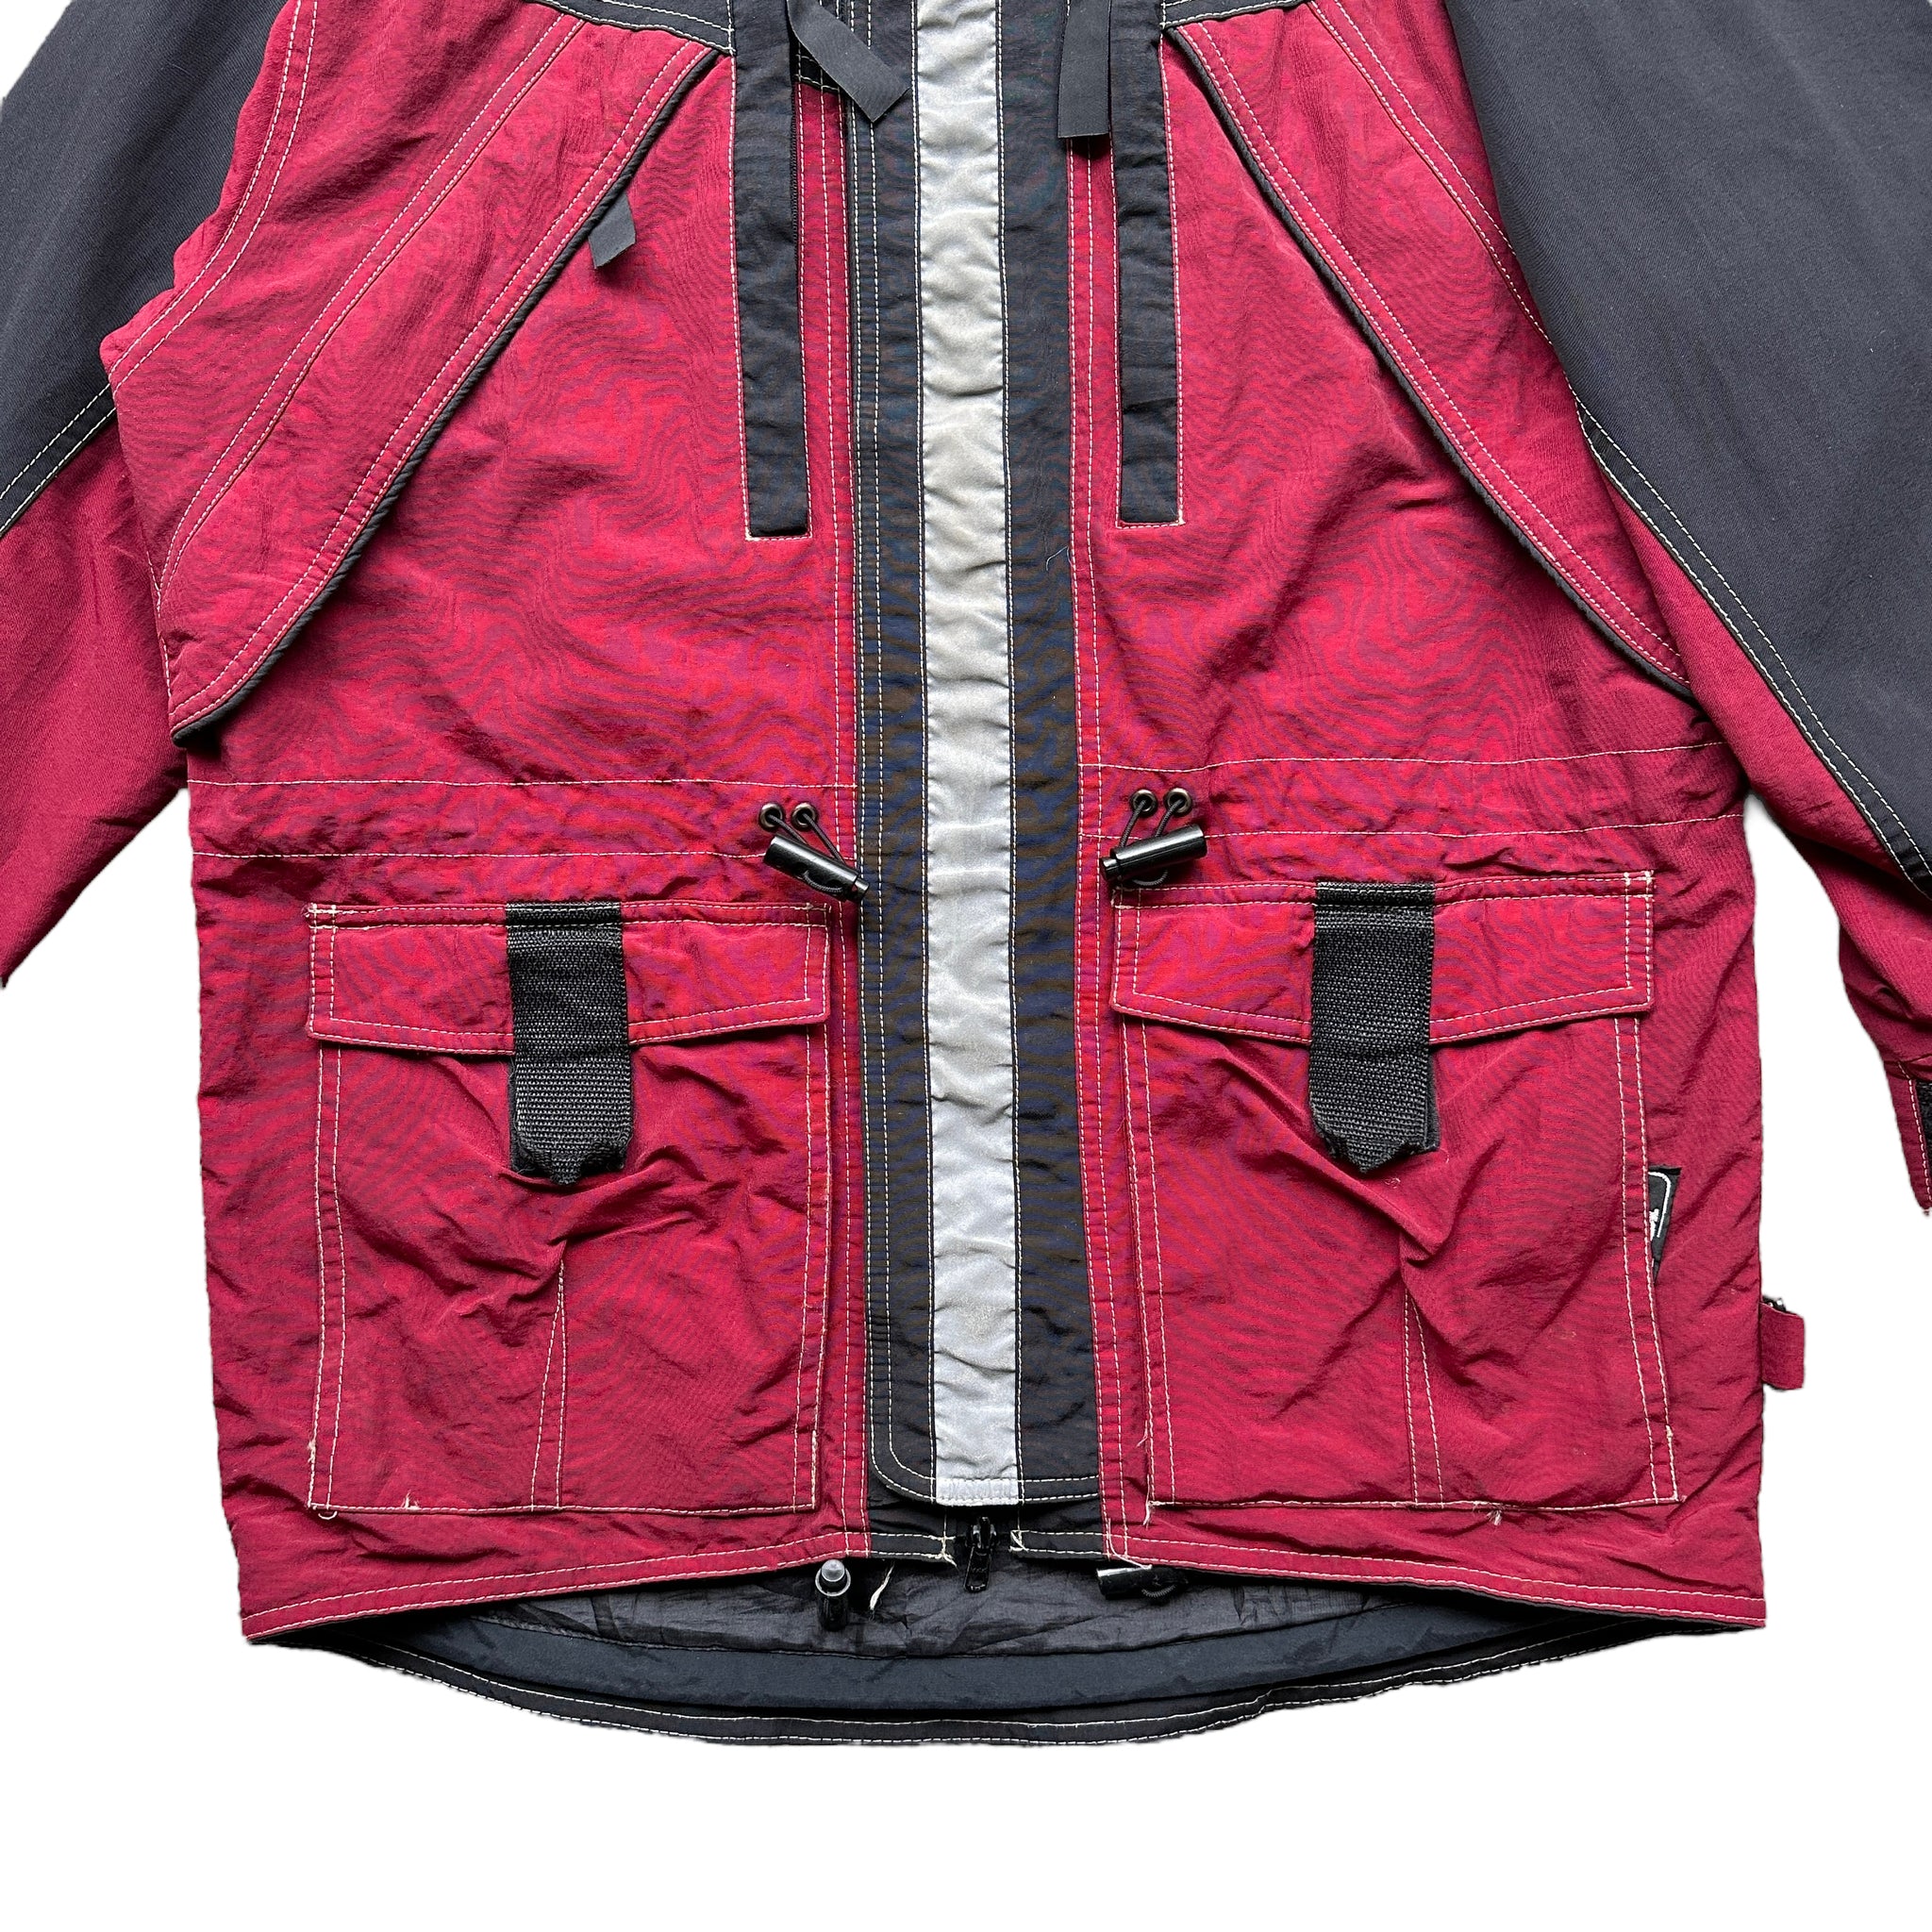 90s Board dokter snowboard jacket medium fit